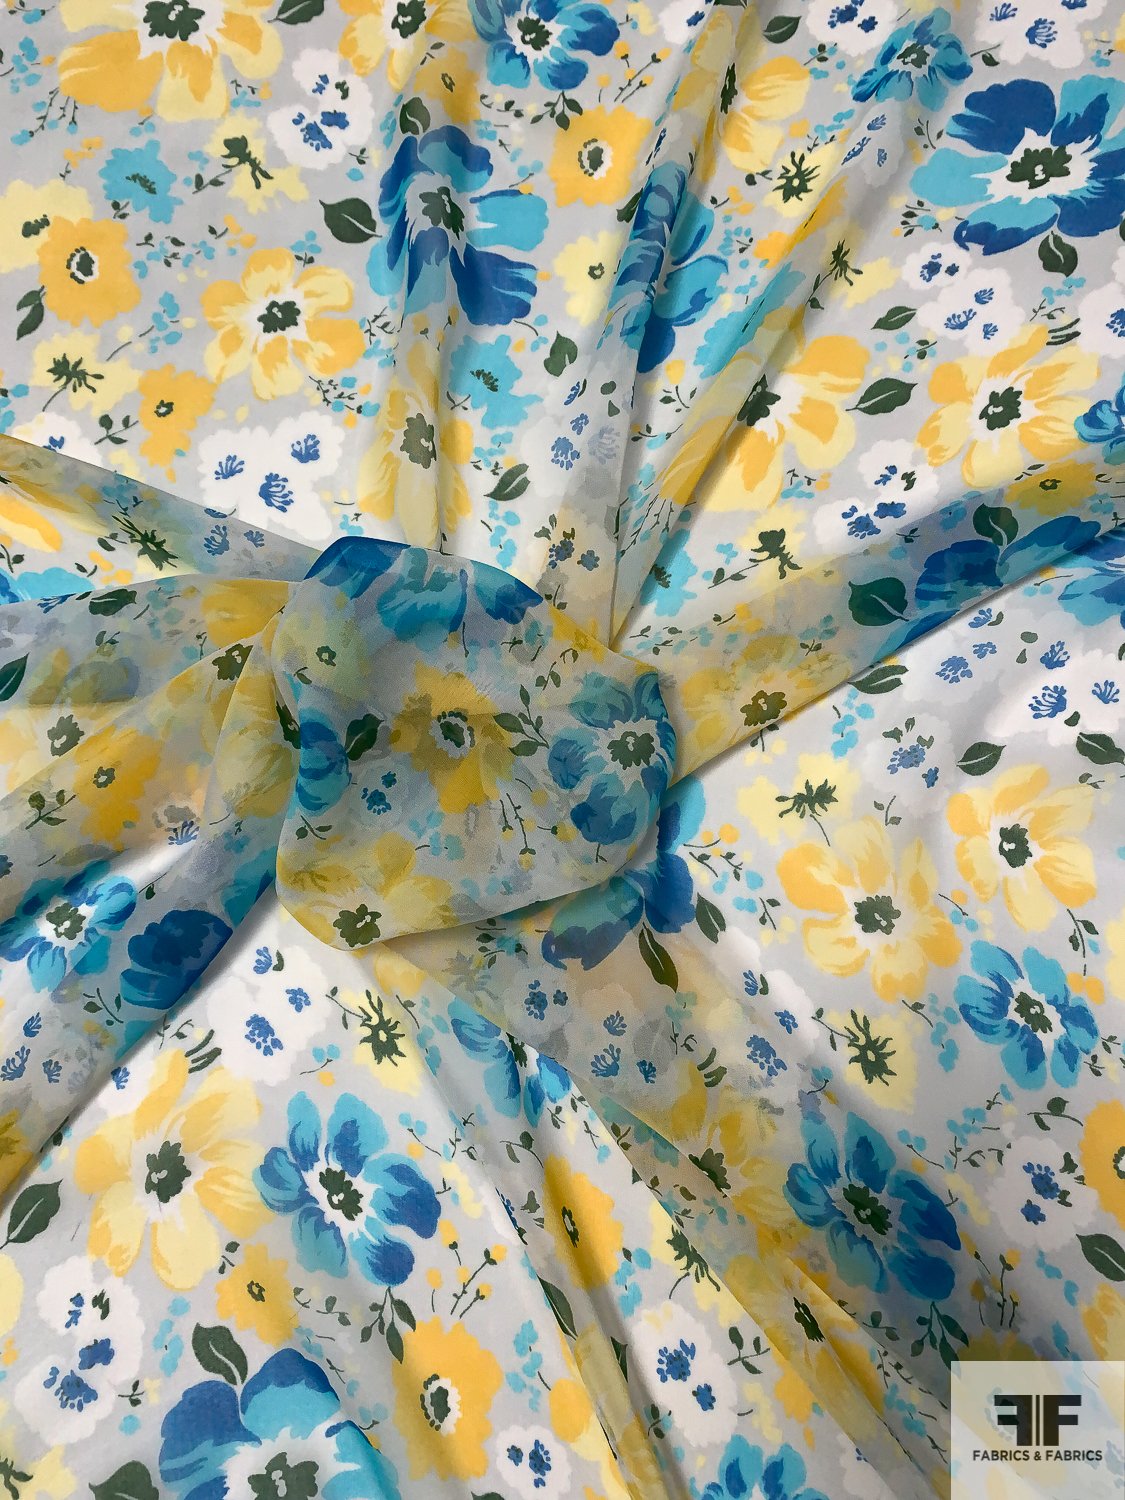 Floral Printed Silk Chiffon - Blue / Aqua / Yellows / Grey / White